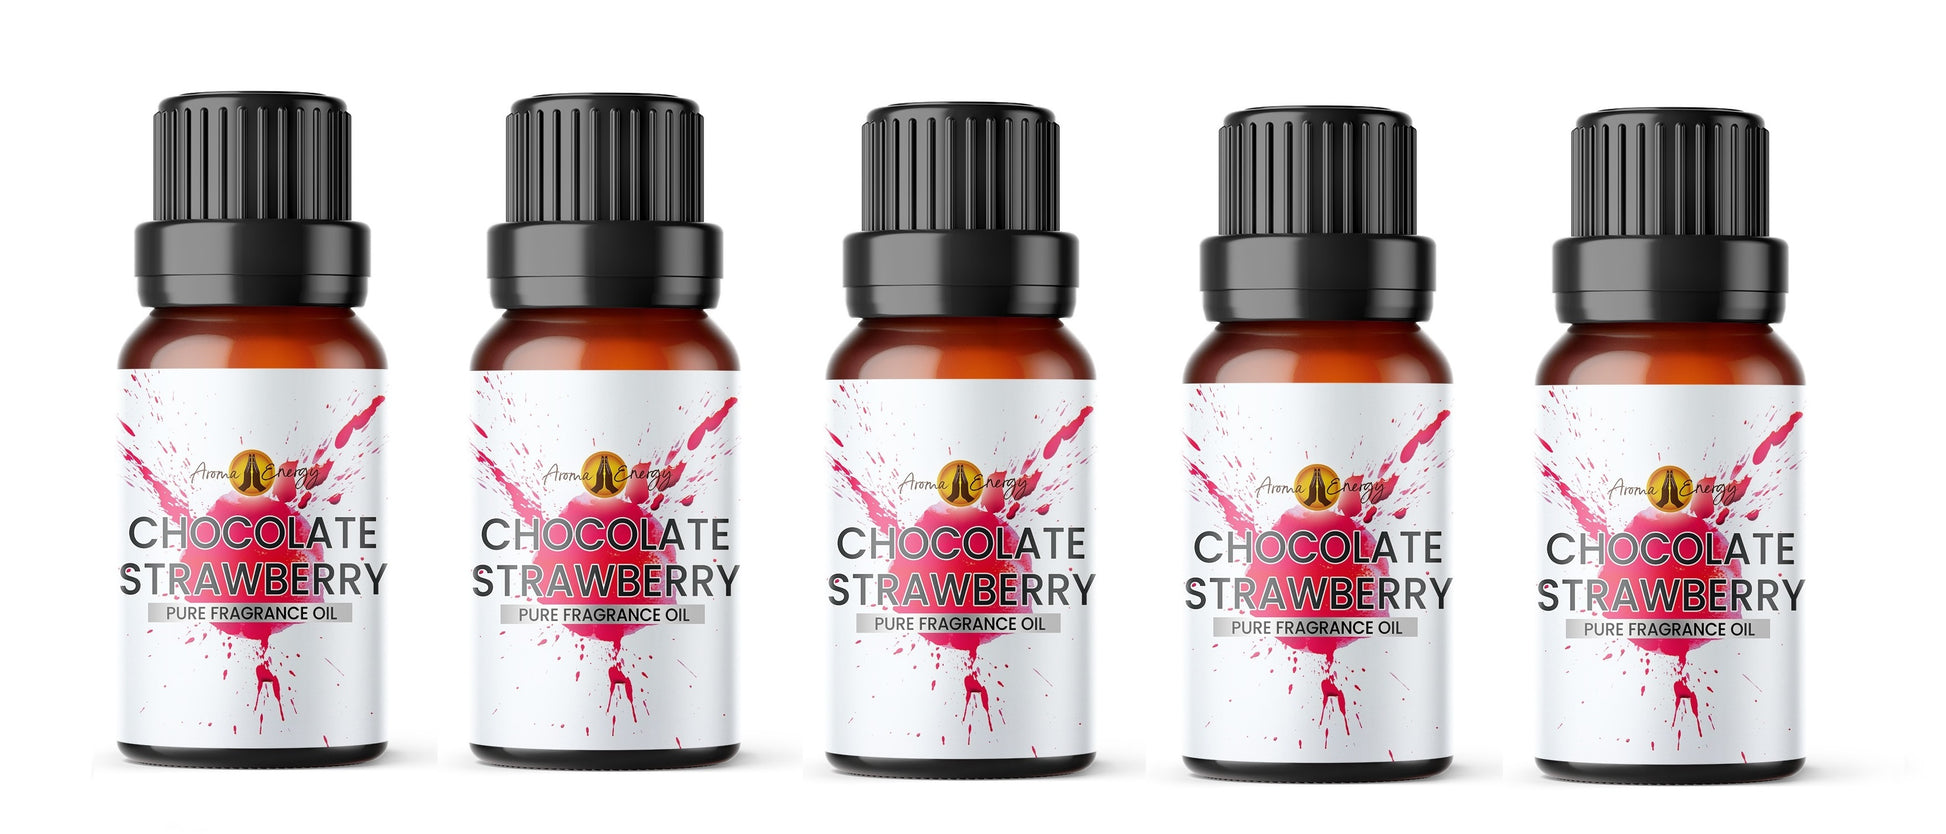 Chocolate Strawberry Fragrance Oil - Aroma Energy